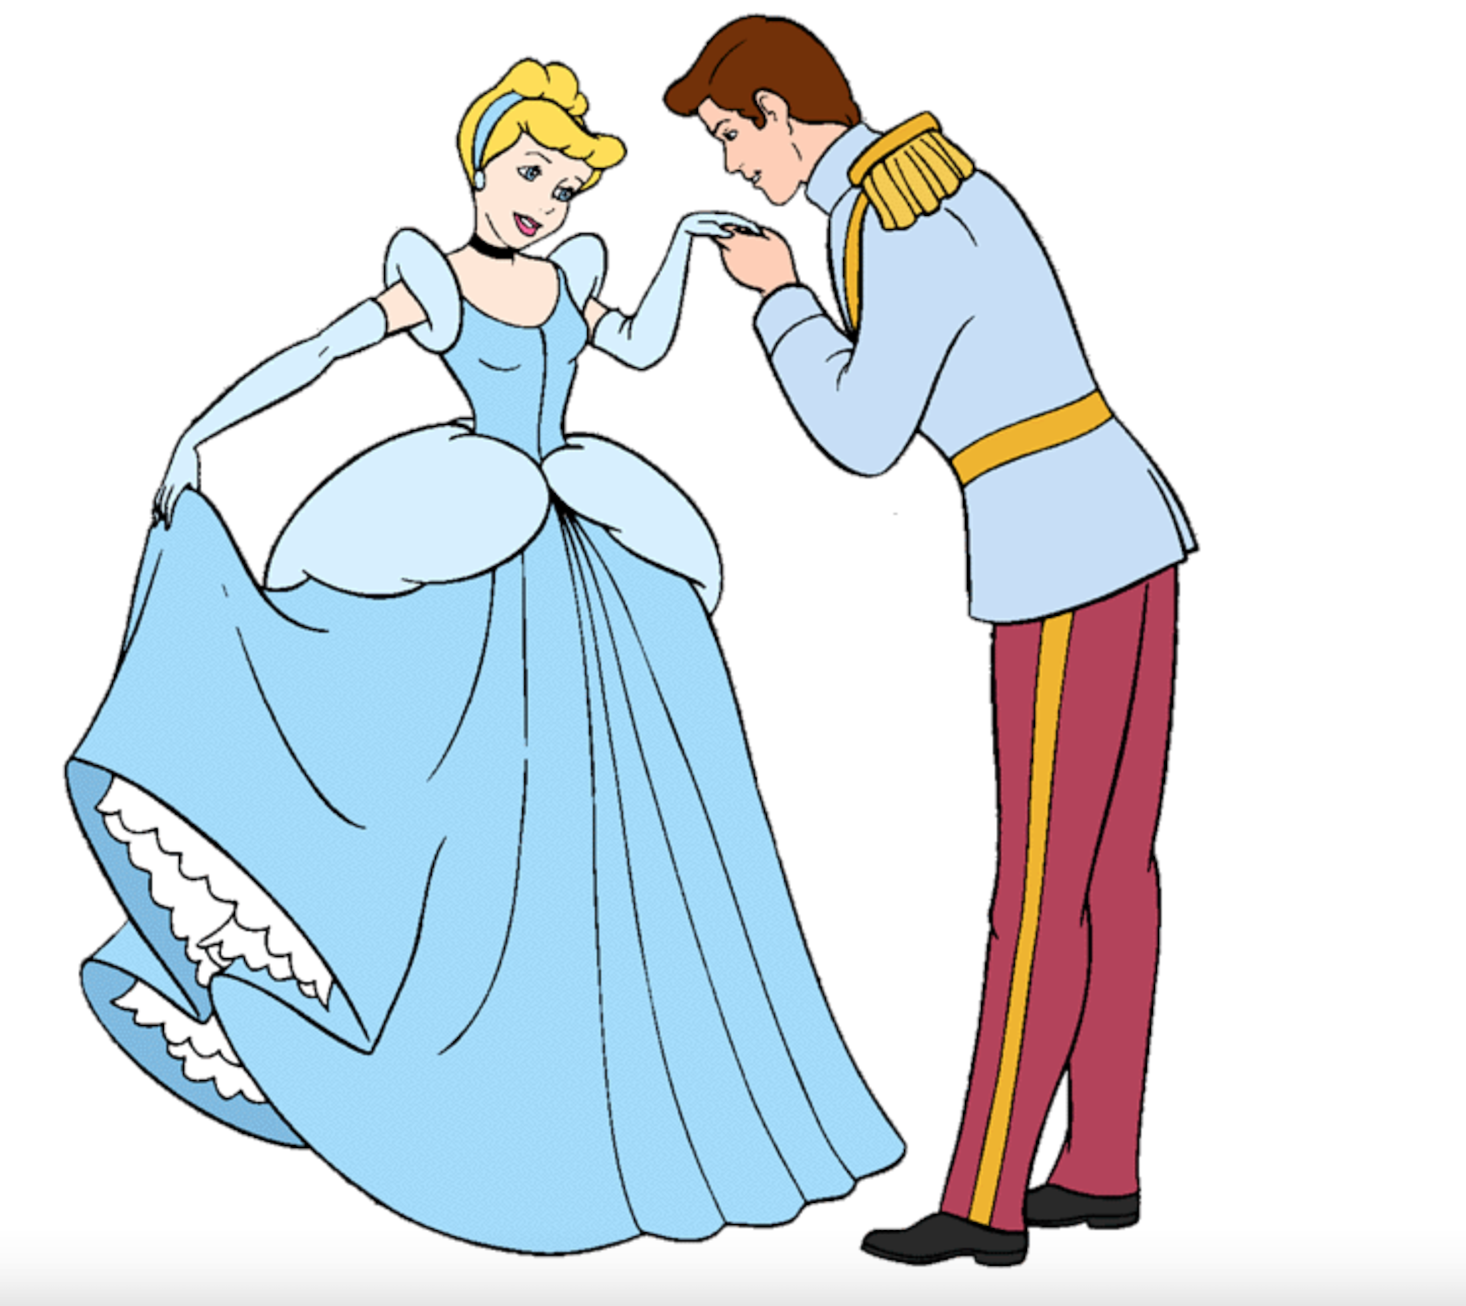 Золушка 1950 принц. Принцесса Золушка и принц. Золушка и принц Дисней. Принс Золушки. Нарисовать бал золушки